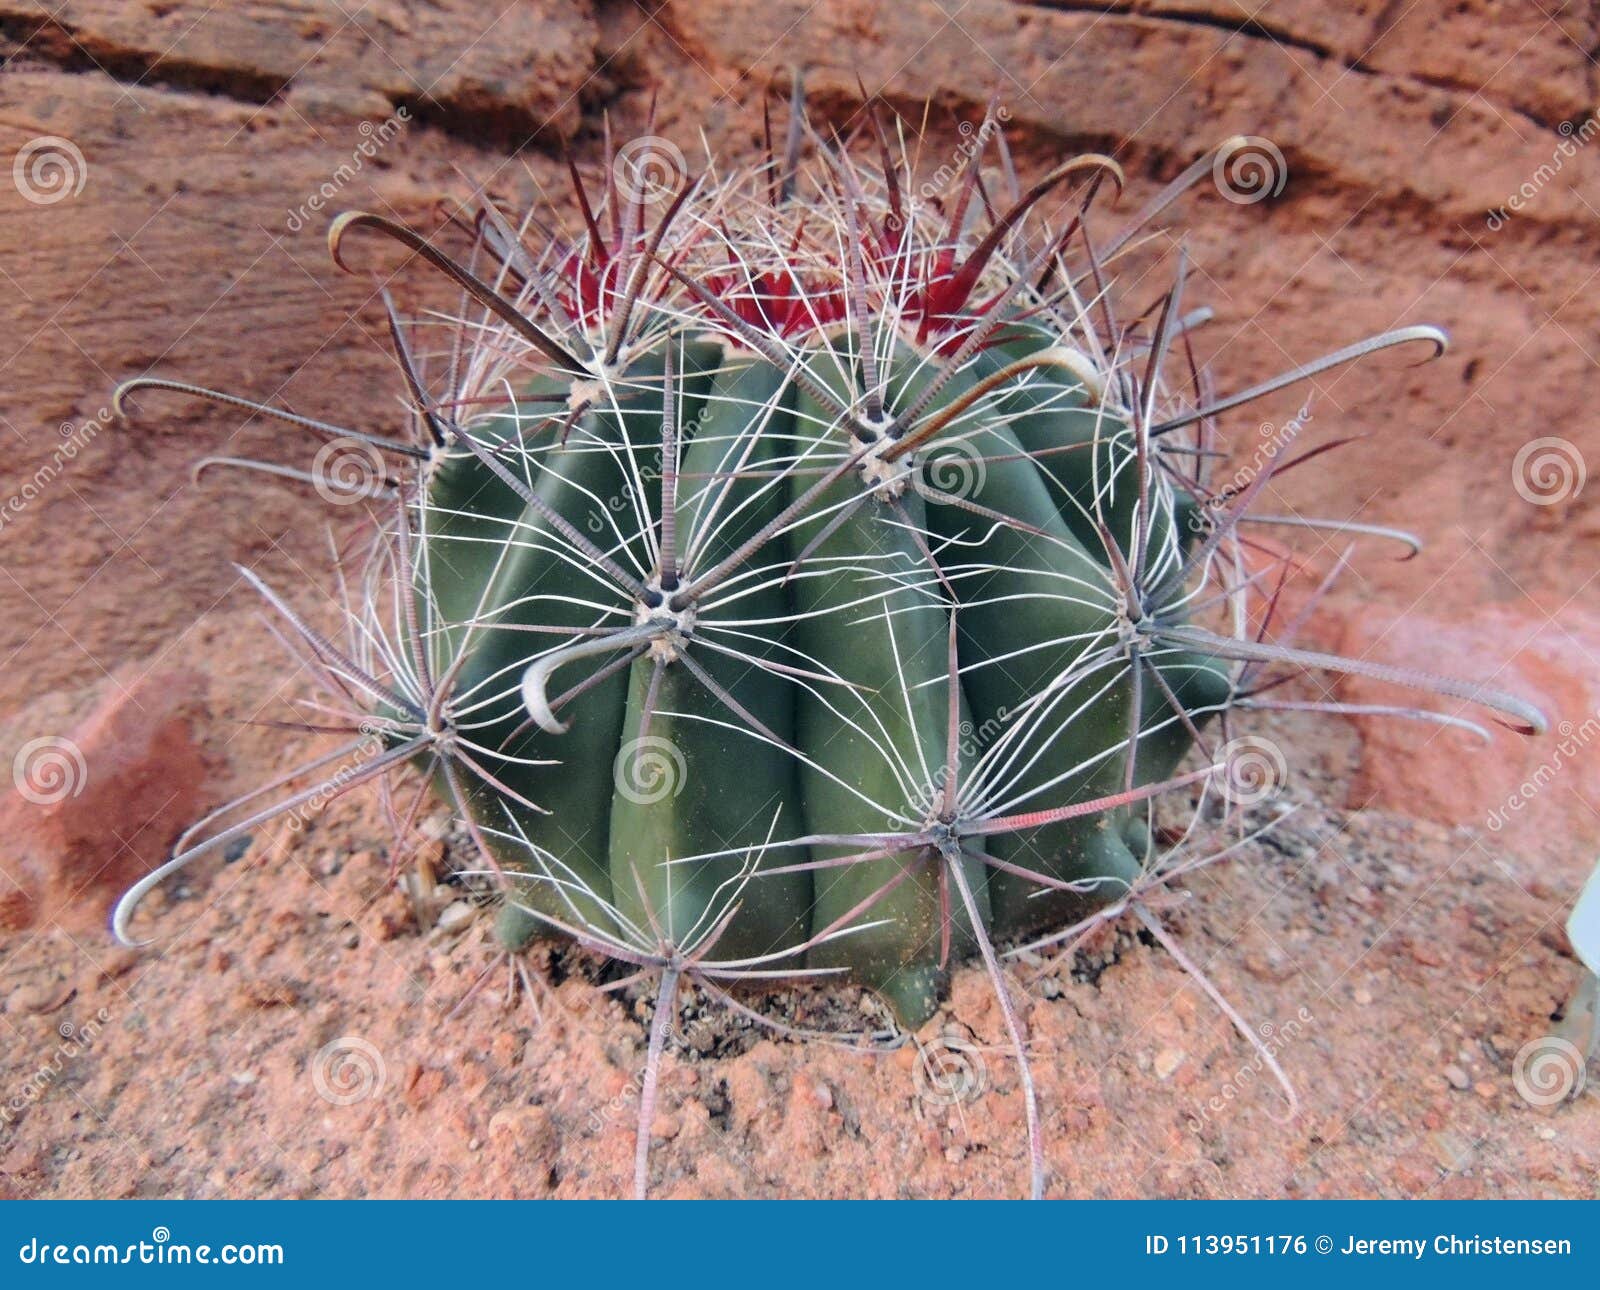 https://thumbs.dreamstime.com/z/interesting-close-up-macro-view-cactus-plant-near-st-george-utah-south-western-desert-usa-fishhook-barrel-ferocactus-113951176.jpg